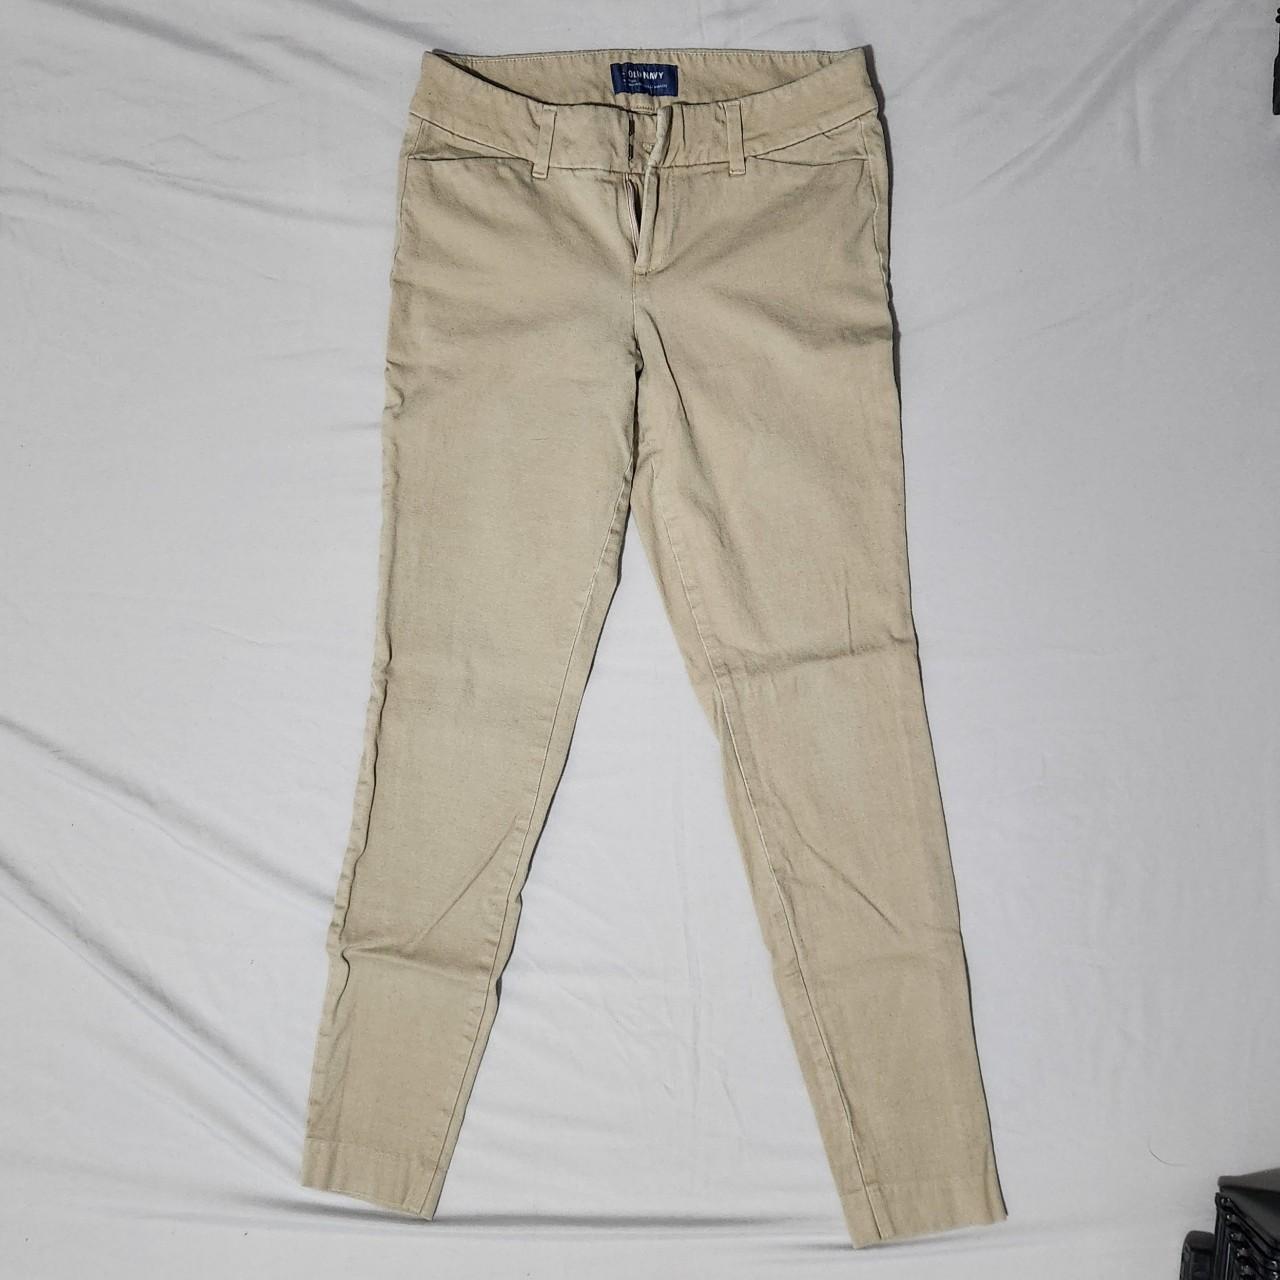 Old Navy pixie pants mid-rise Size 2 regular. - Depop